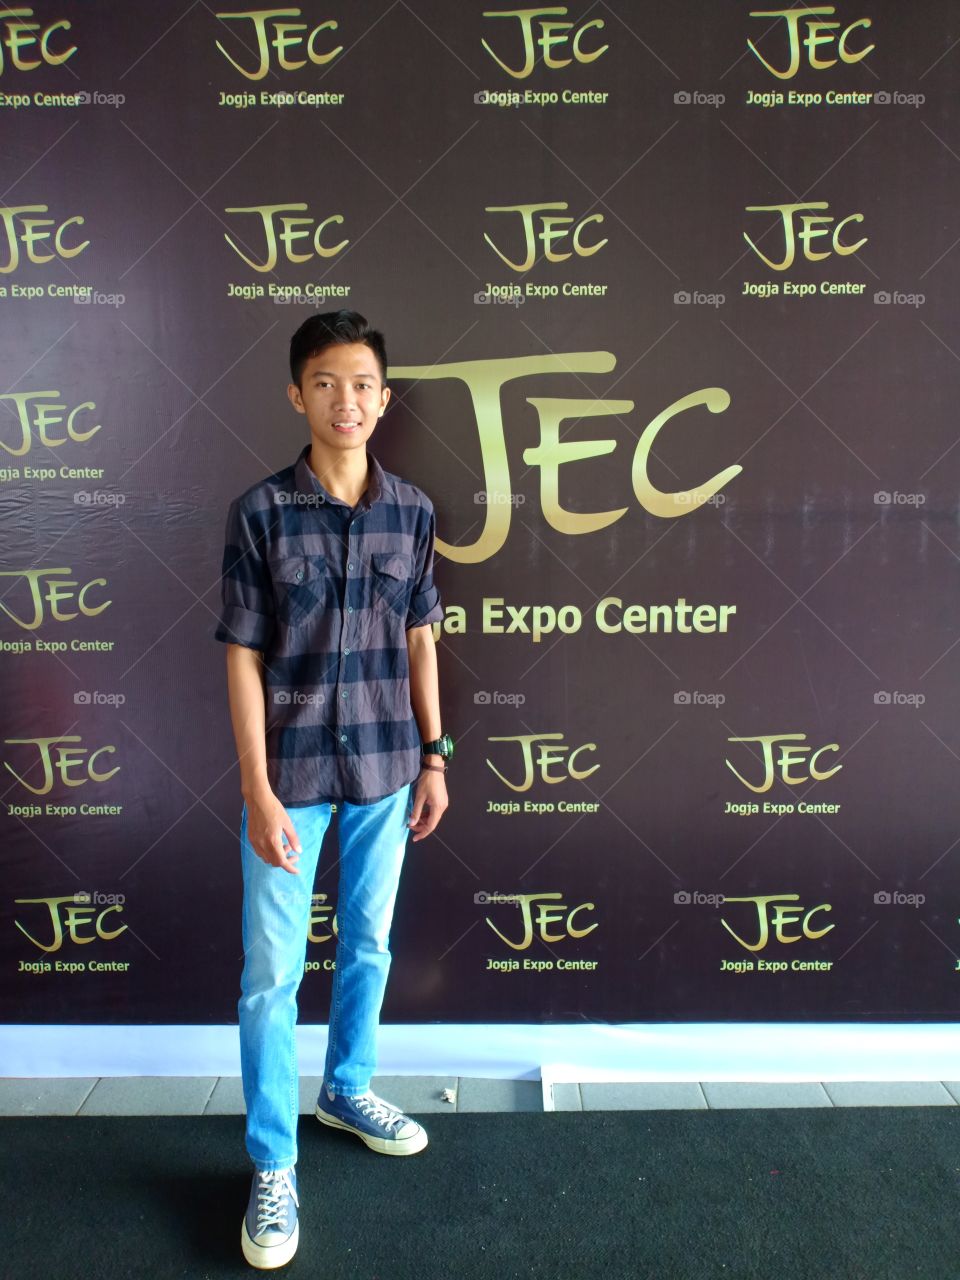 Jogja Expo center